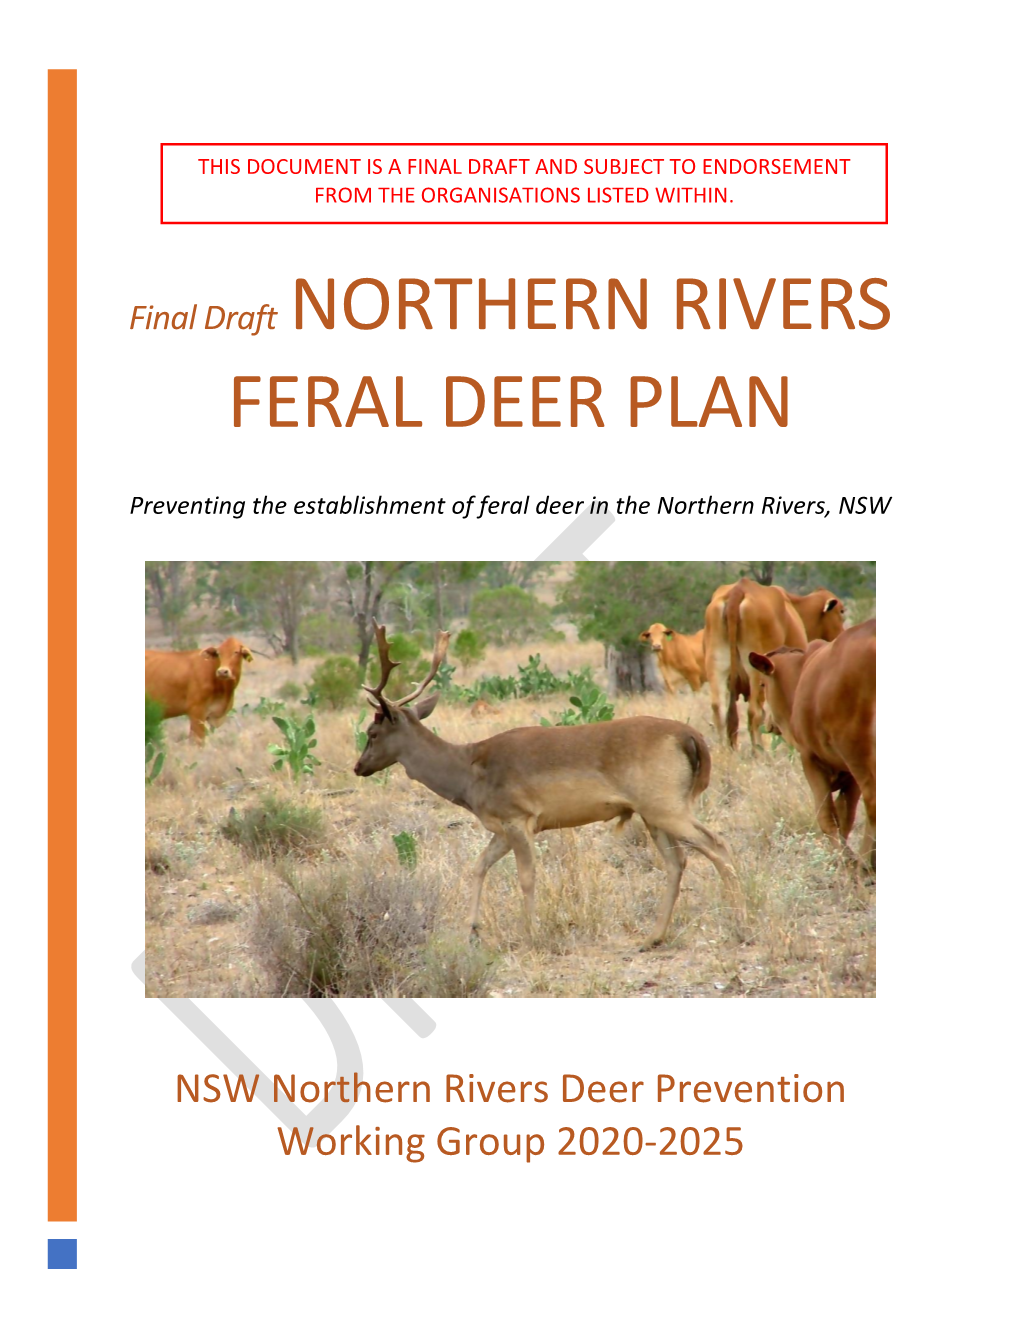 Item 4.2 Endorsement of the Northern Rivers Feral Deer Plan